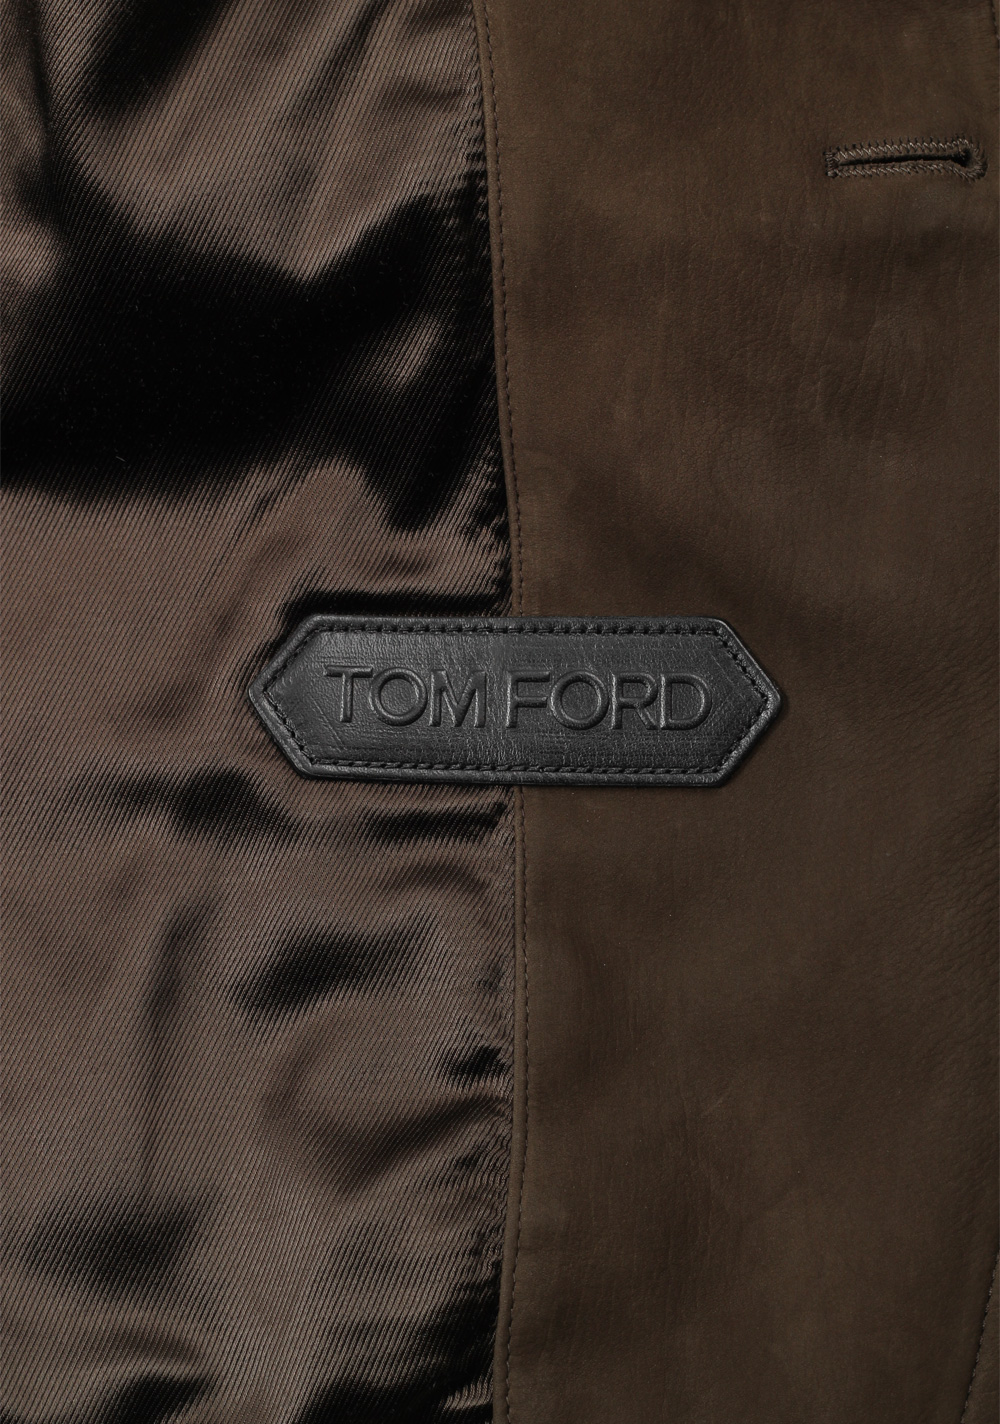 TOM FORD Cashmere Sartorial Leather Jacket Coat | Costume Limité